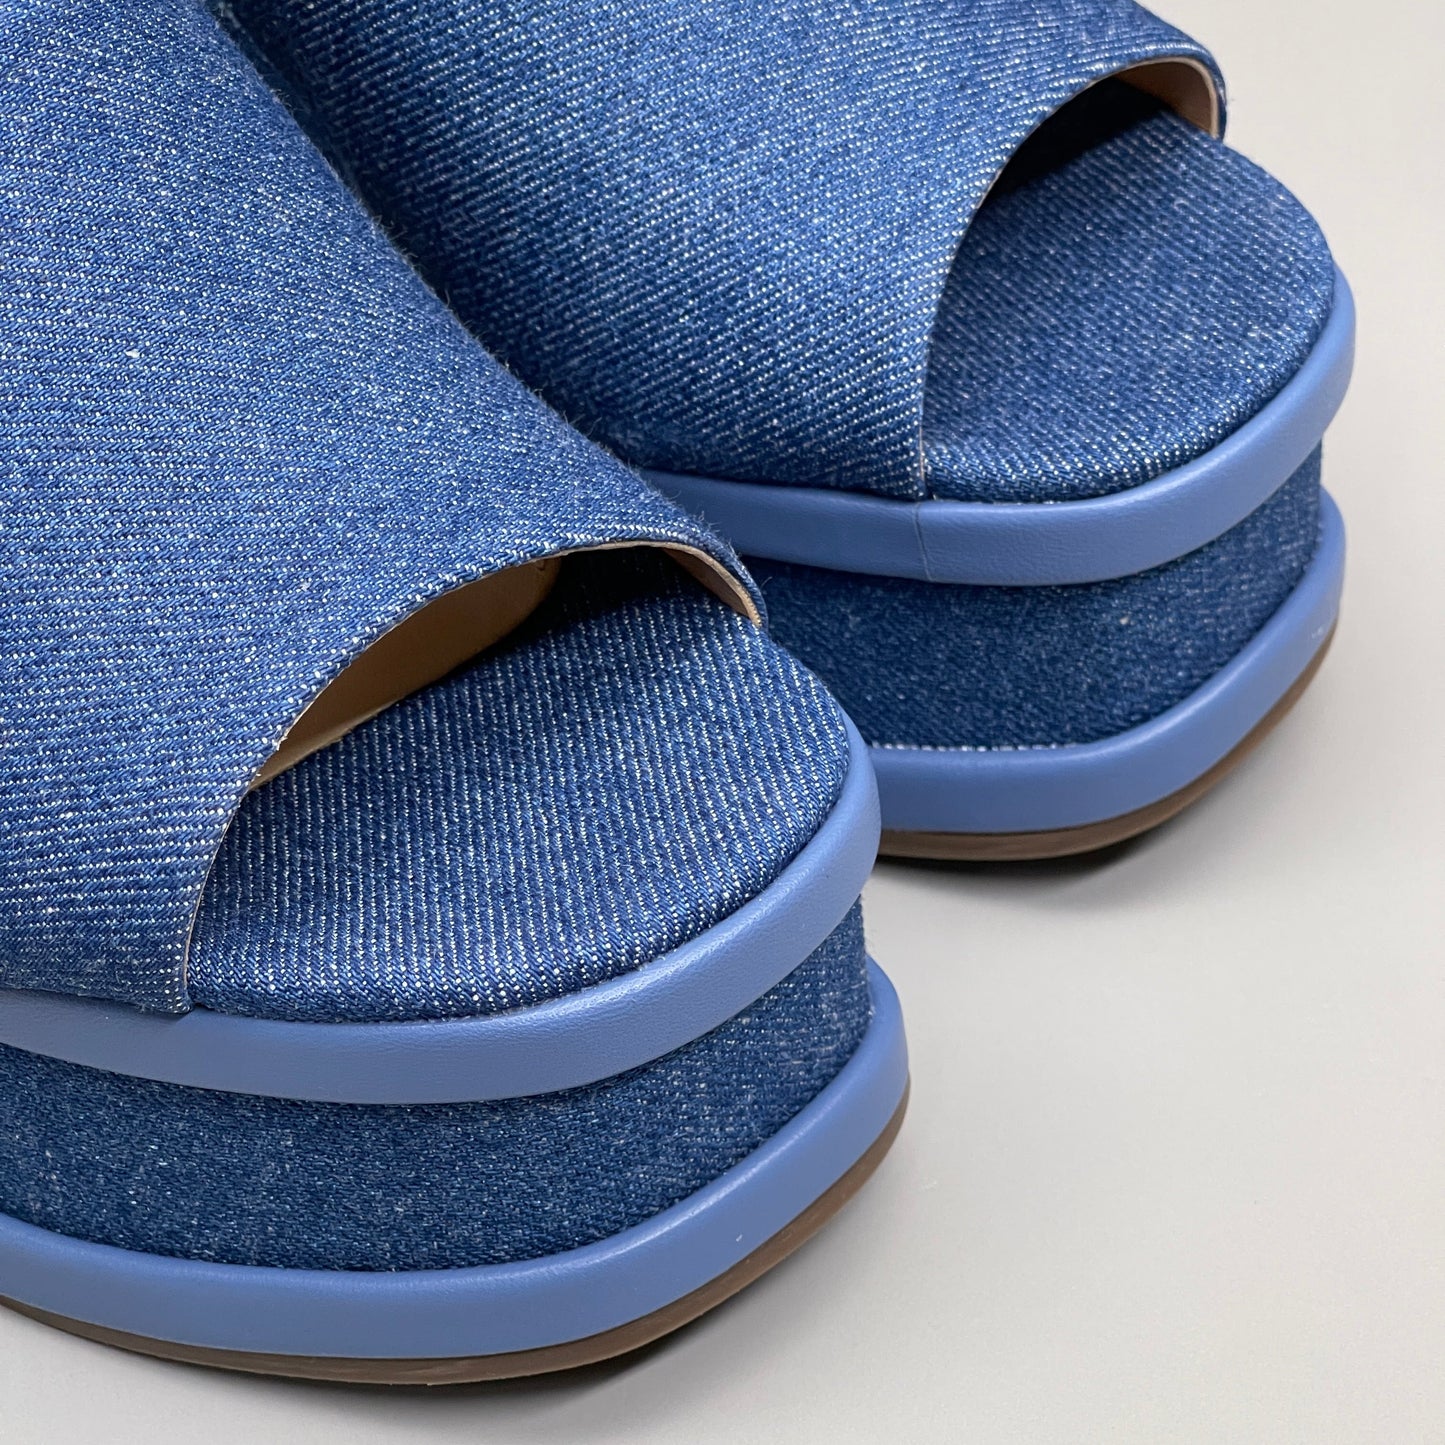 SCHUTZ Dalle Denim Women's Wedge Sandal Blue Platform Shoe Sz 6.5B S213260001 (New)